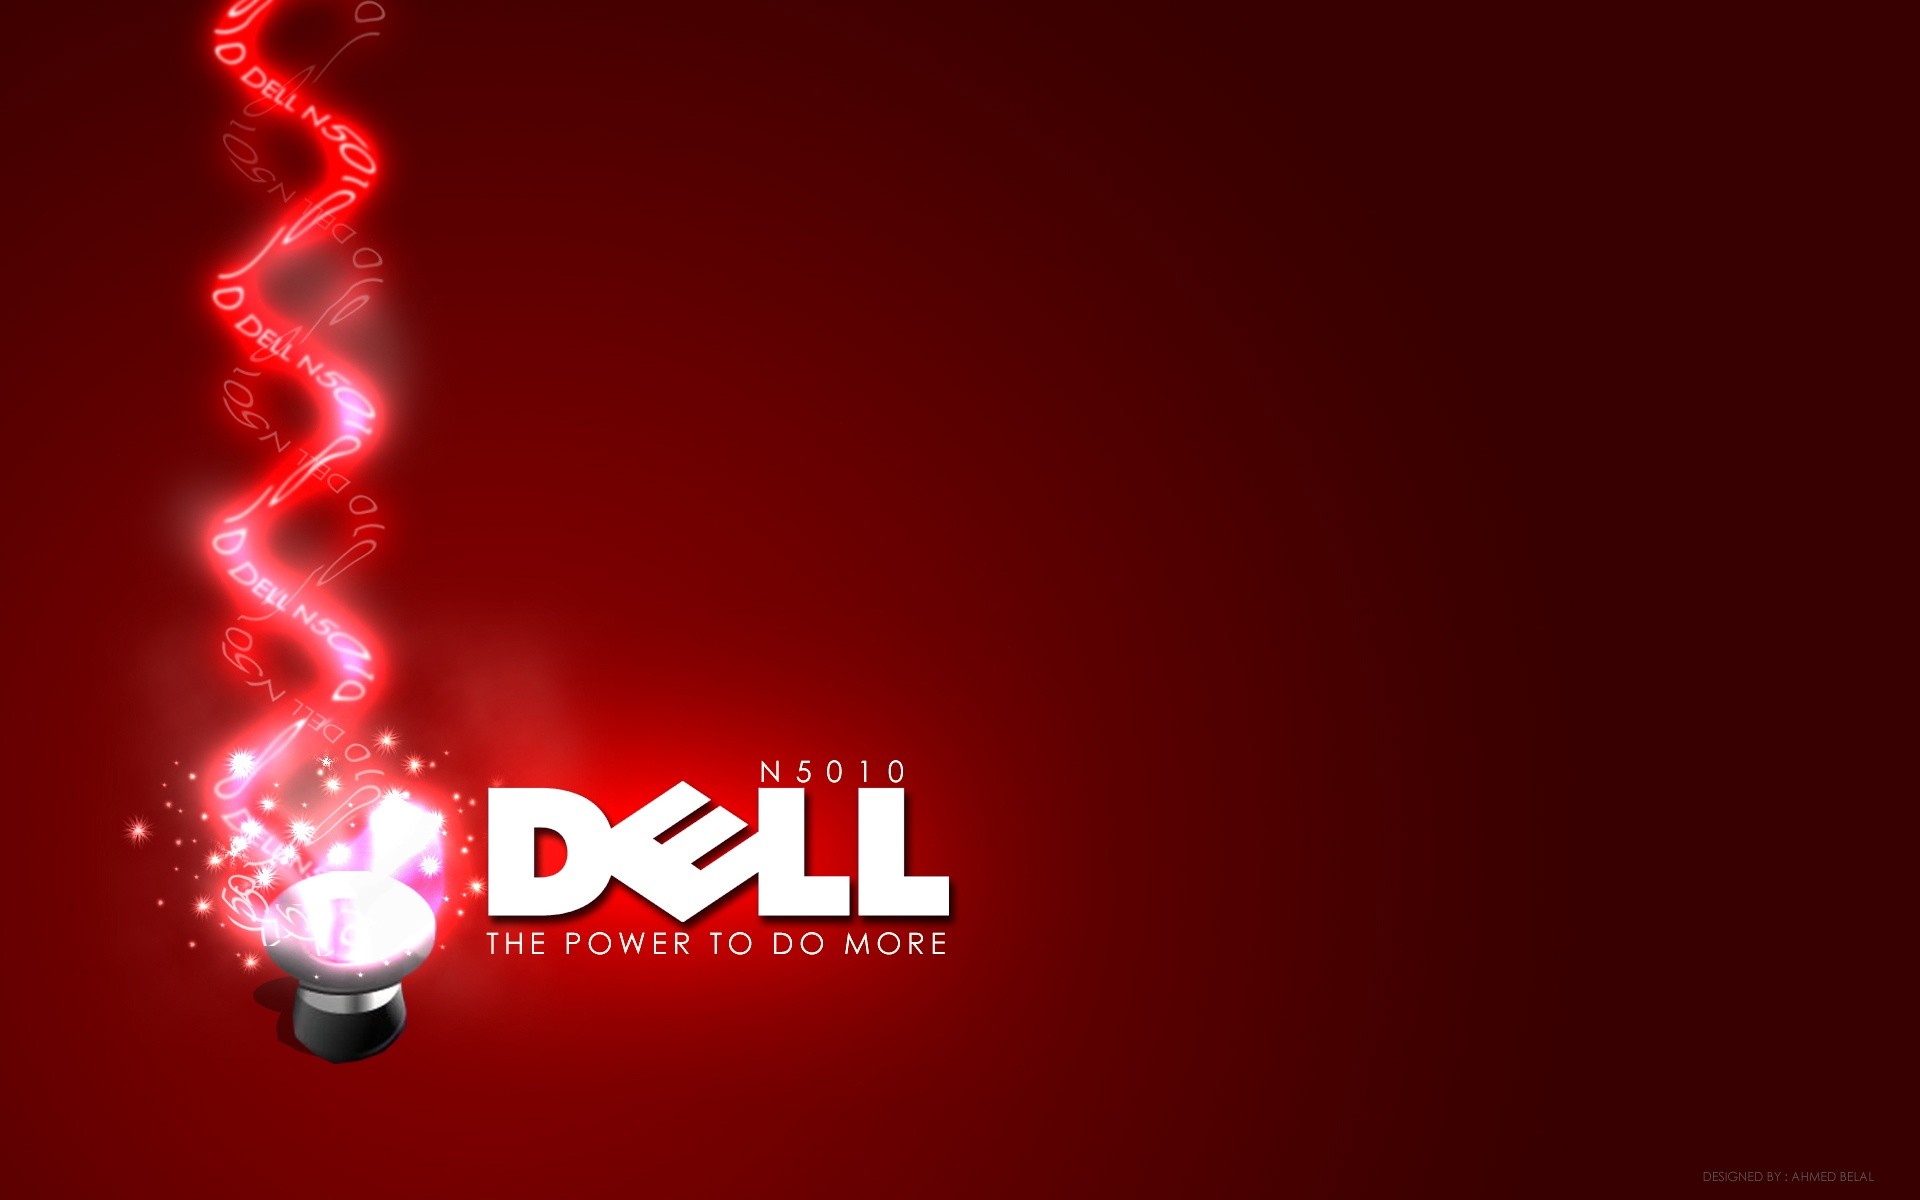 Dell Desktop Background 60 Pictures